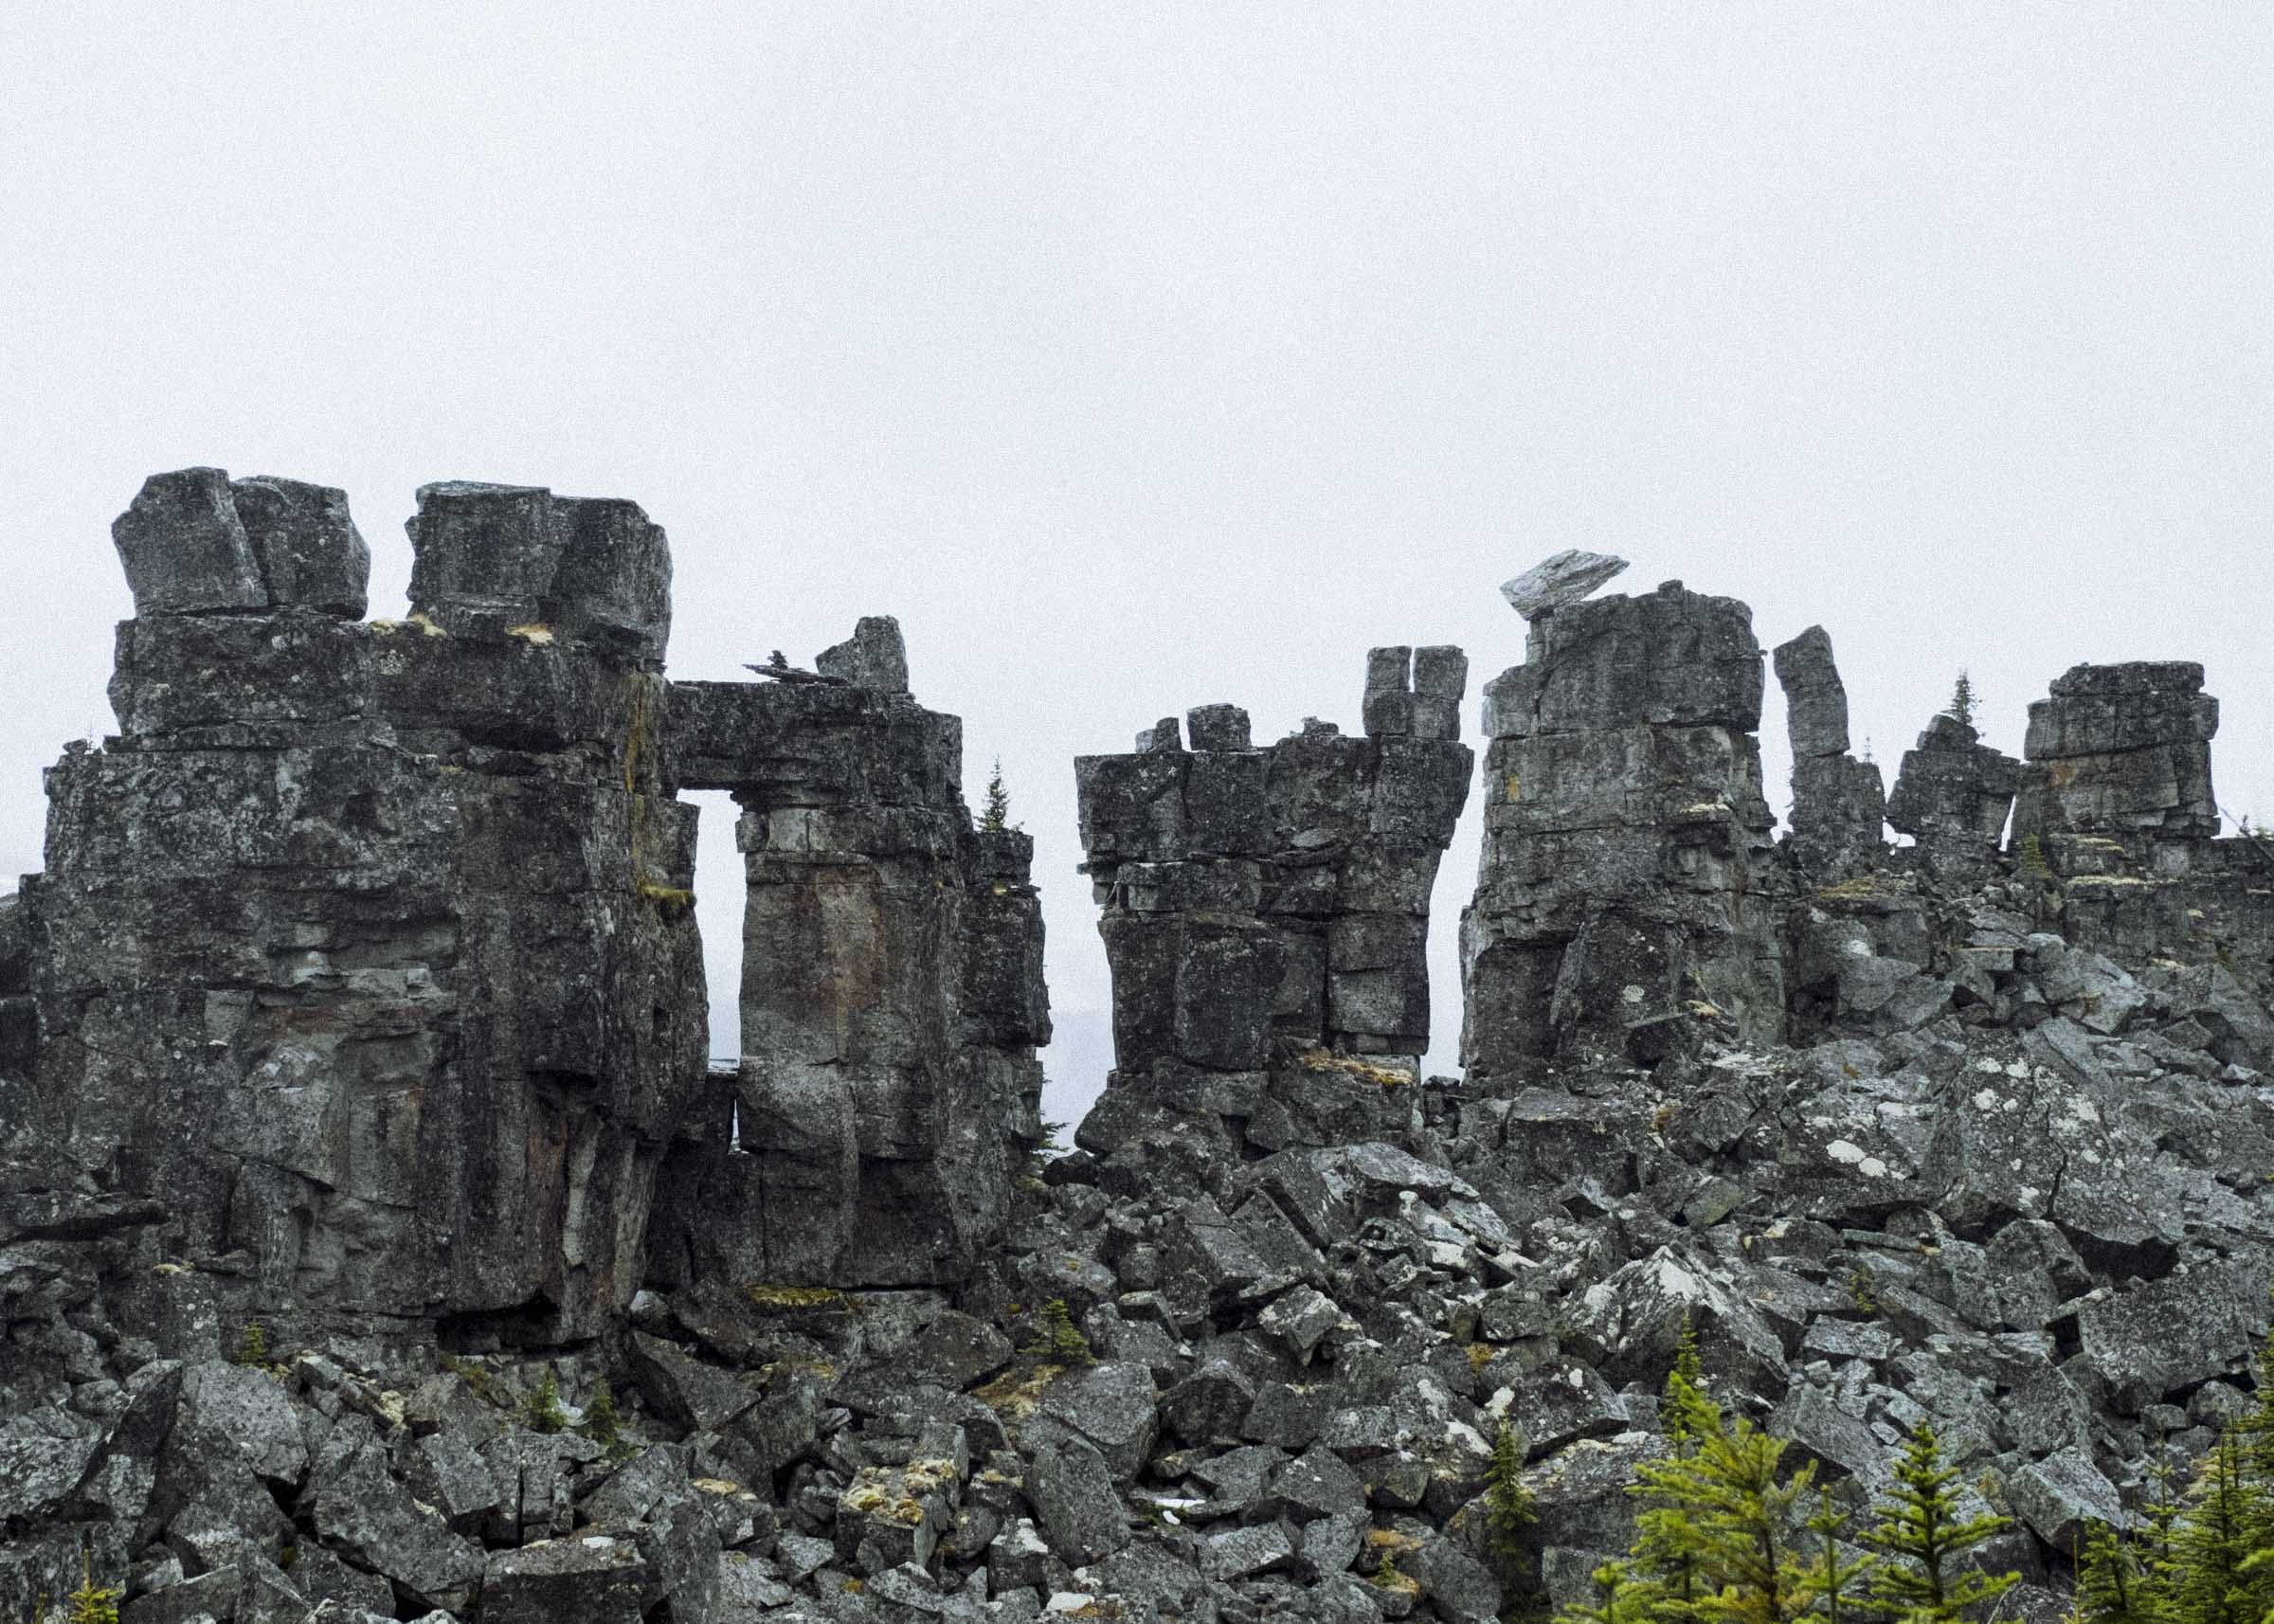 Old crumbling rock towers at the Shipyard Trail, Tumbler Ridge, BC